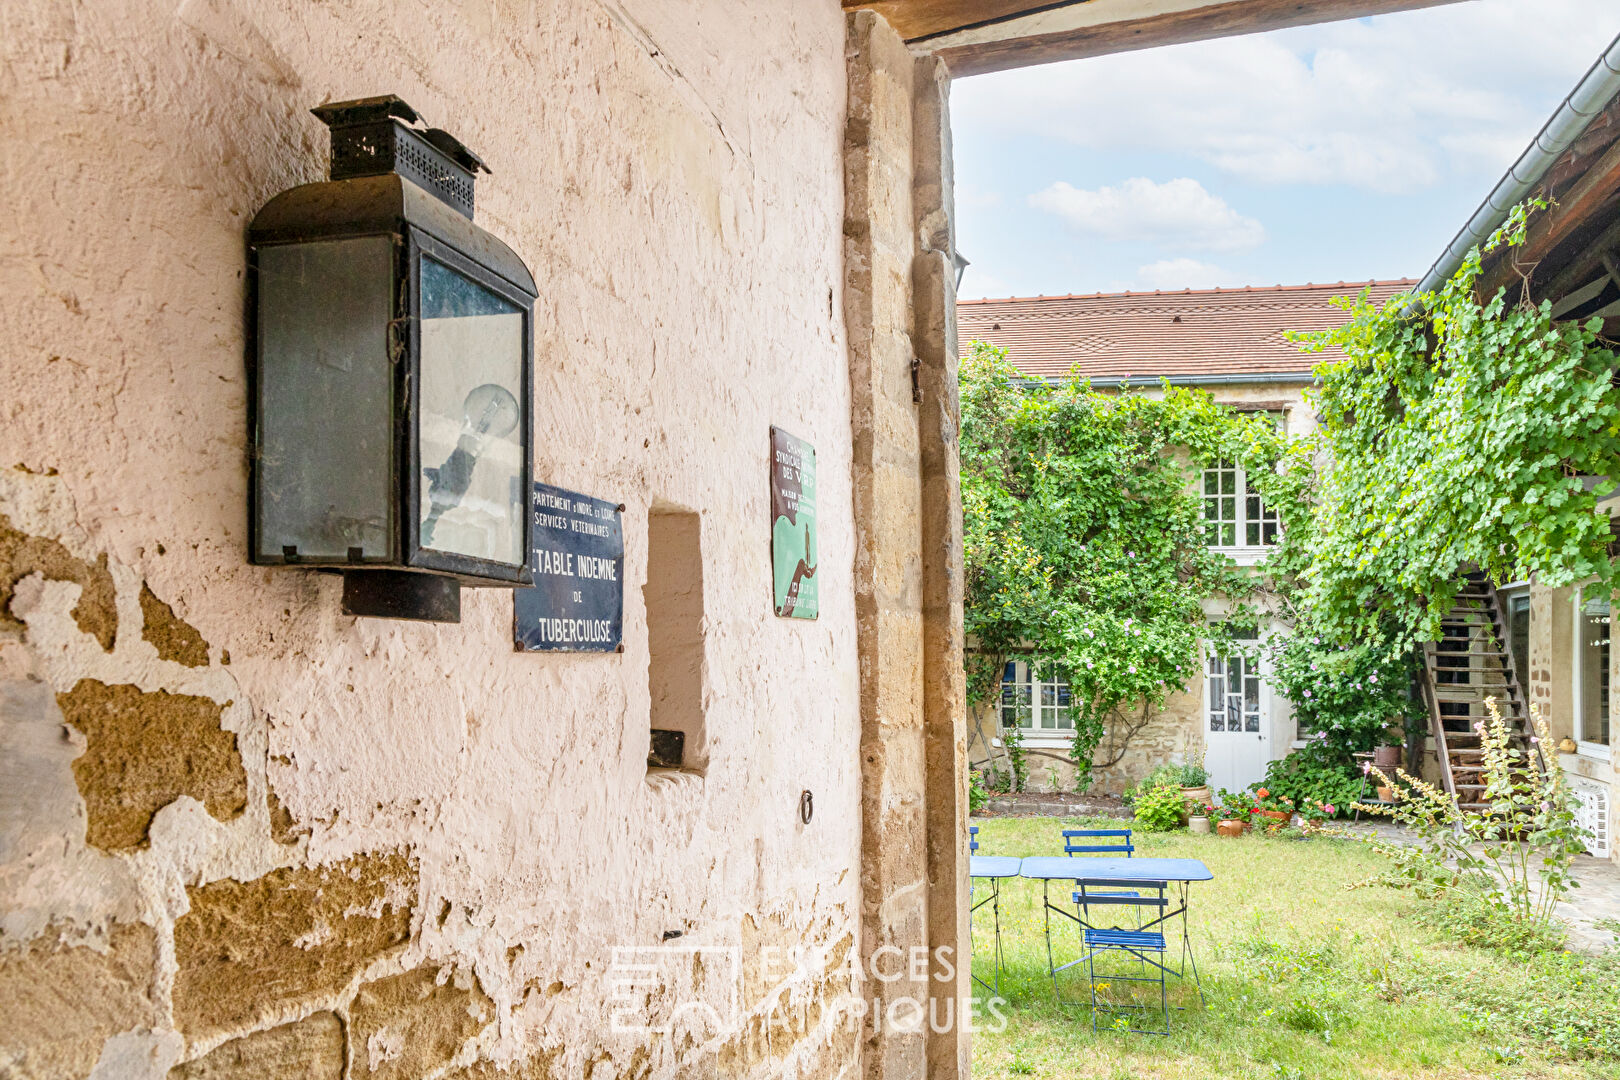 Bernardin de Saint Pierre lived there… Exceptional farmhouse in the village of Eragny sur Oise